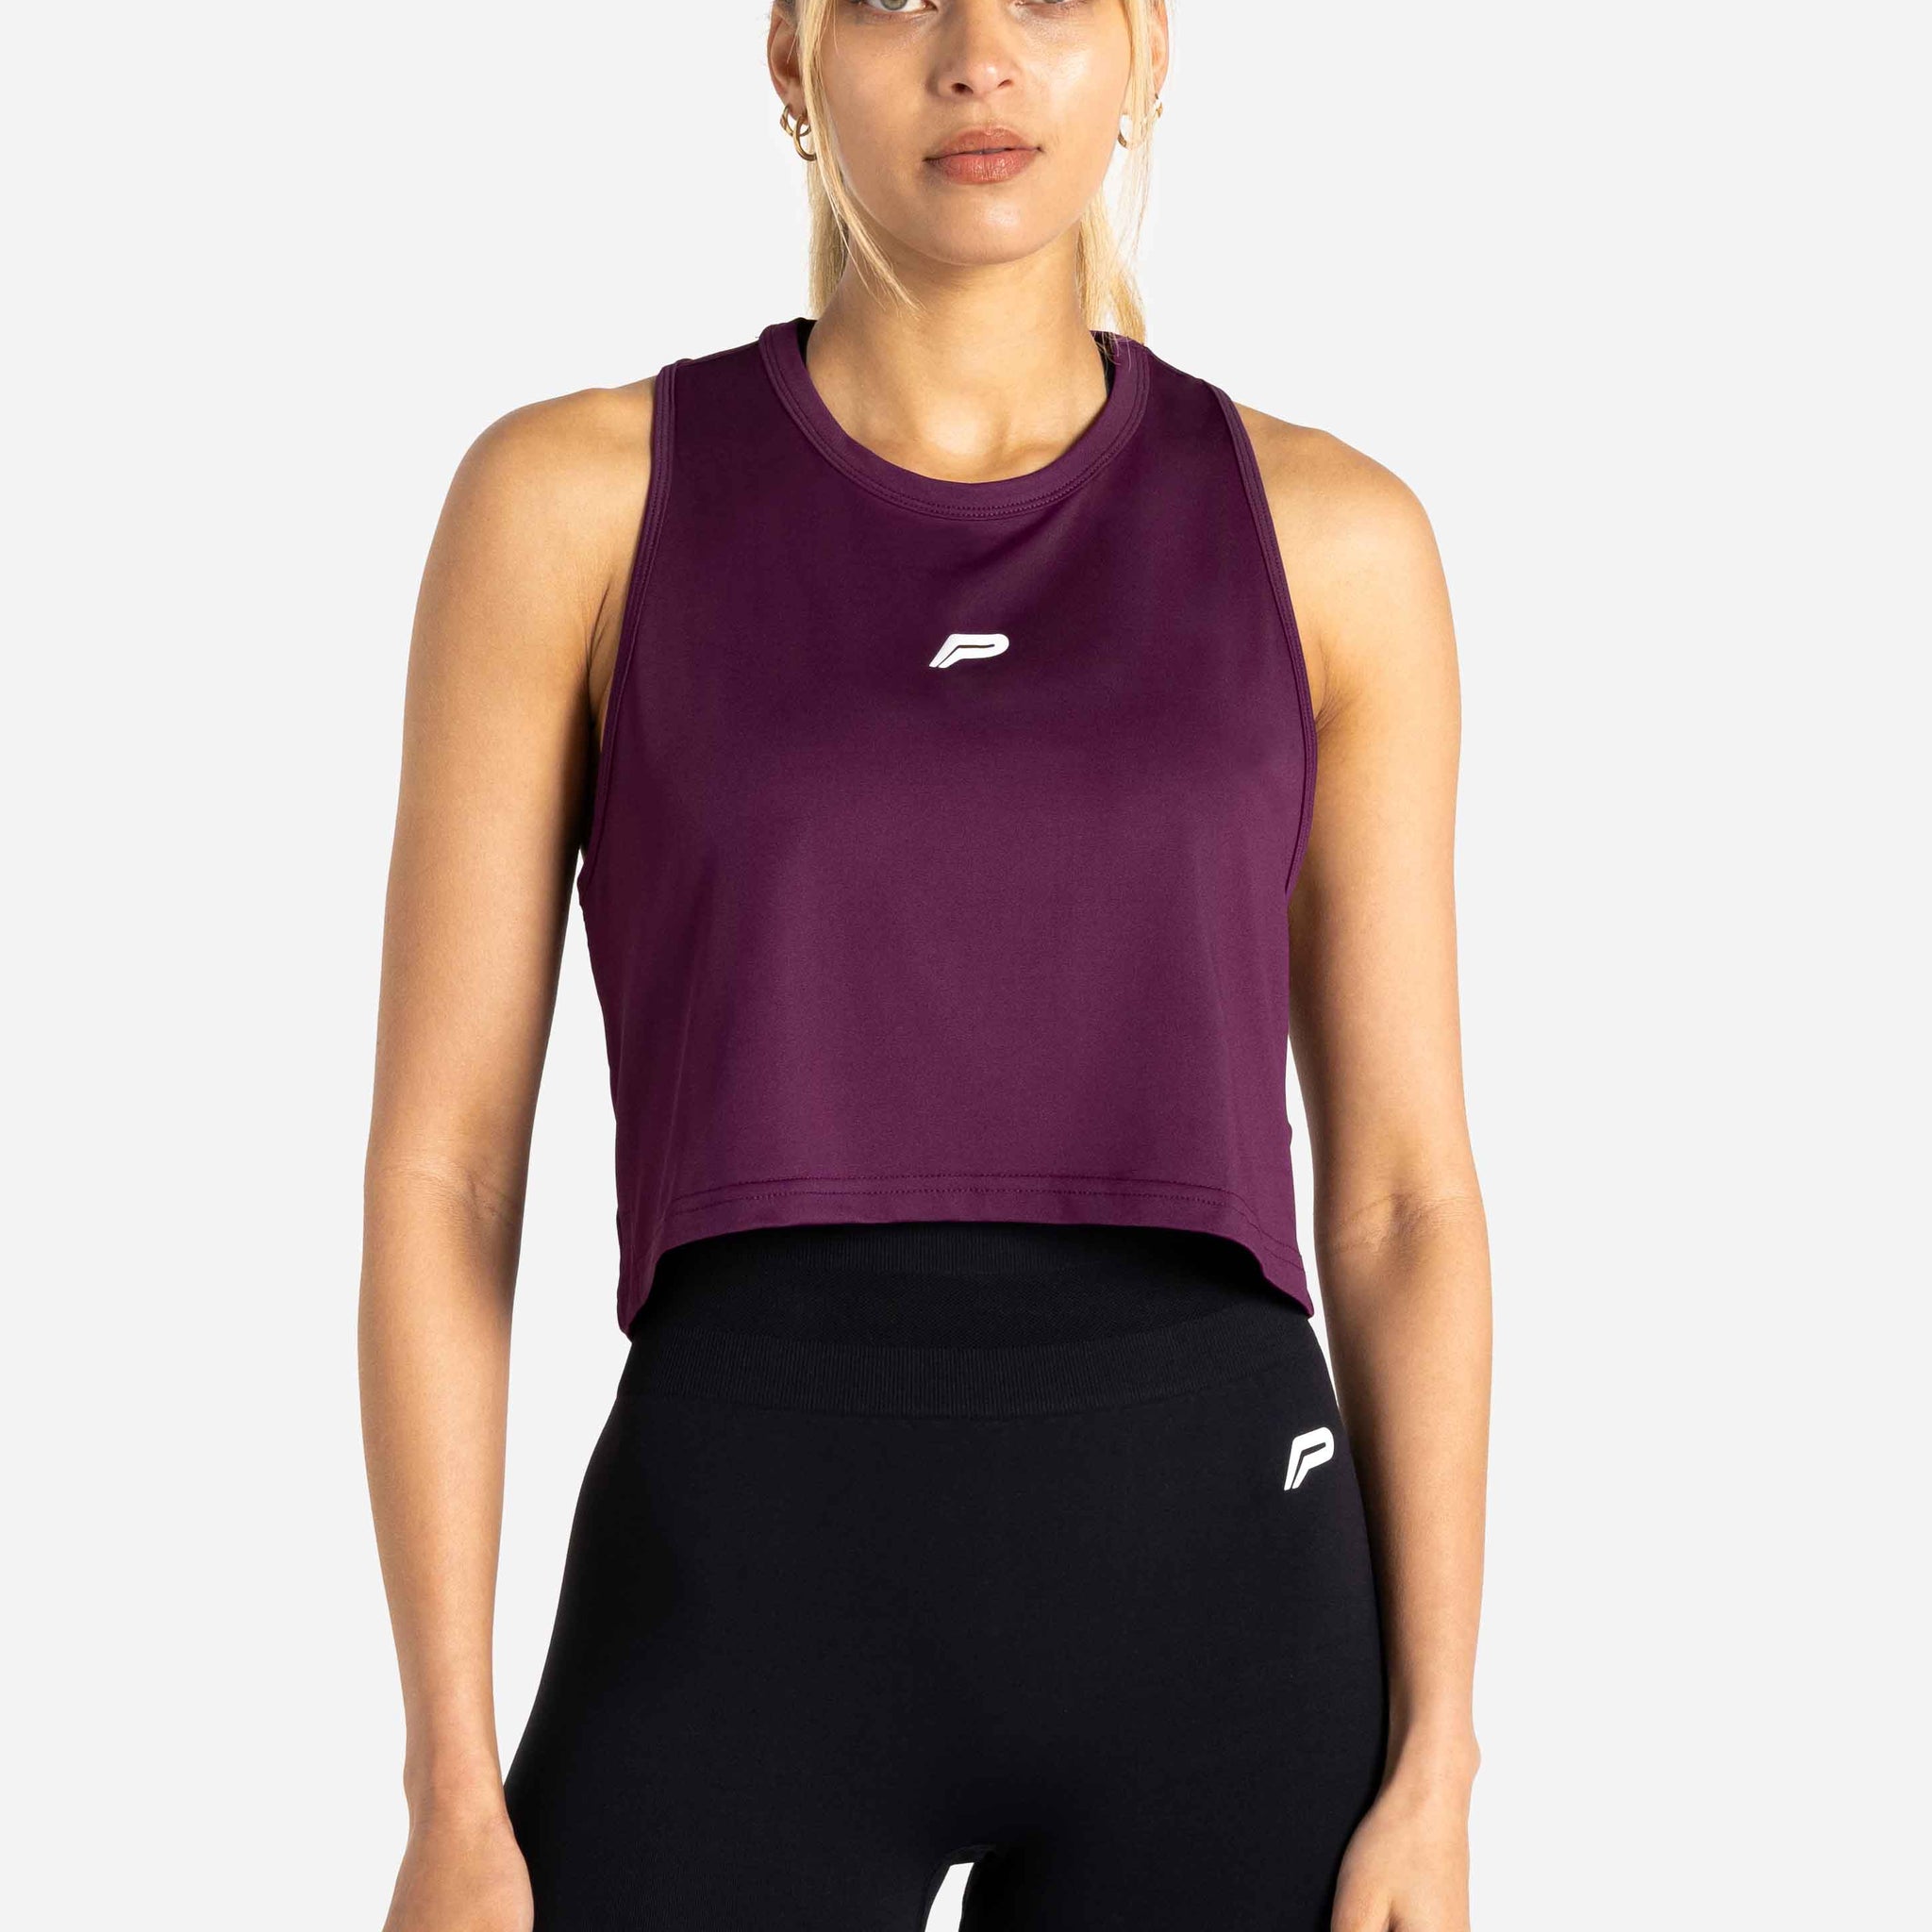 PENERAN Fitness Jogging Suit Female Running Clothes Women T Shirt